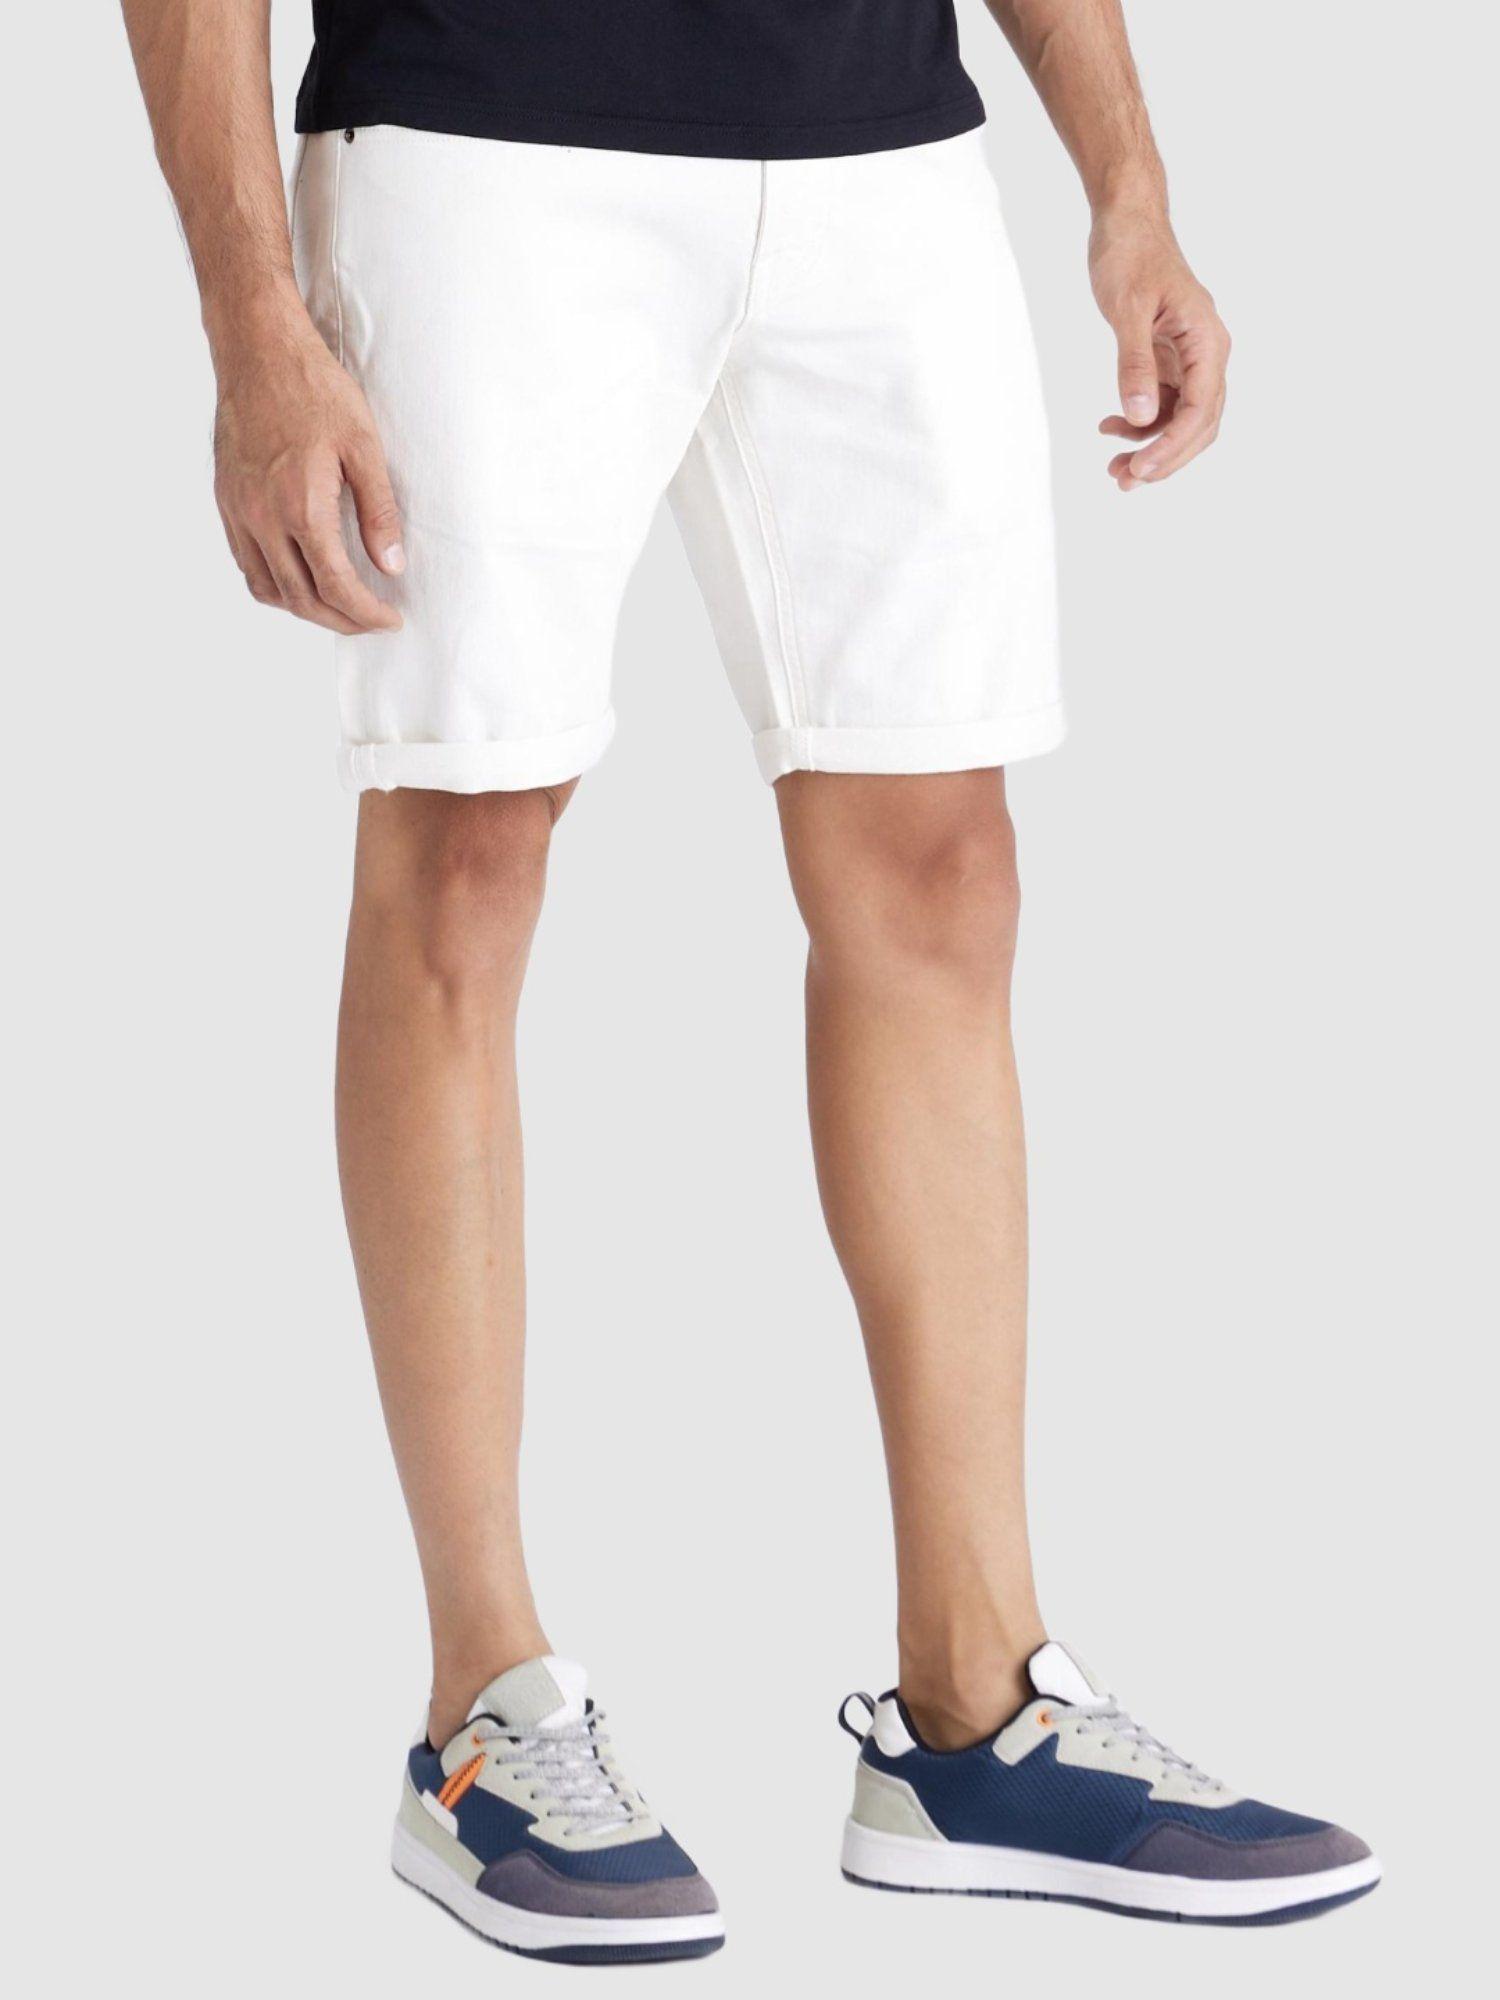 men-solid-white-shorts